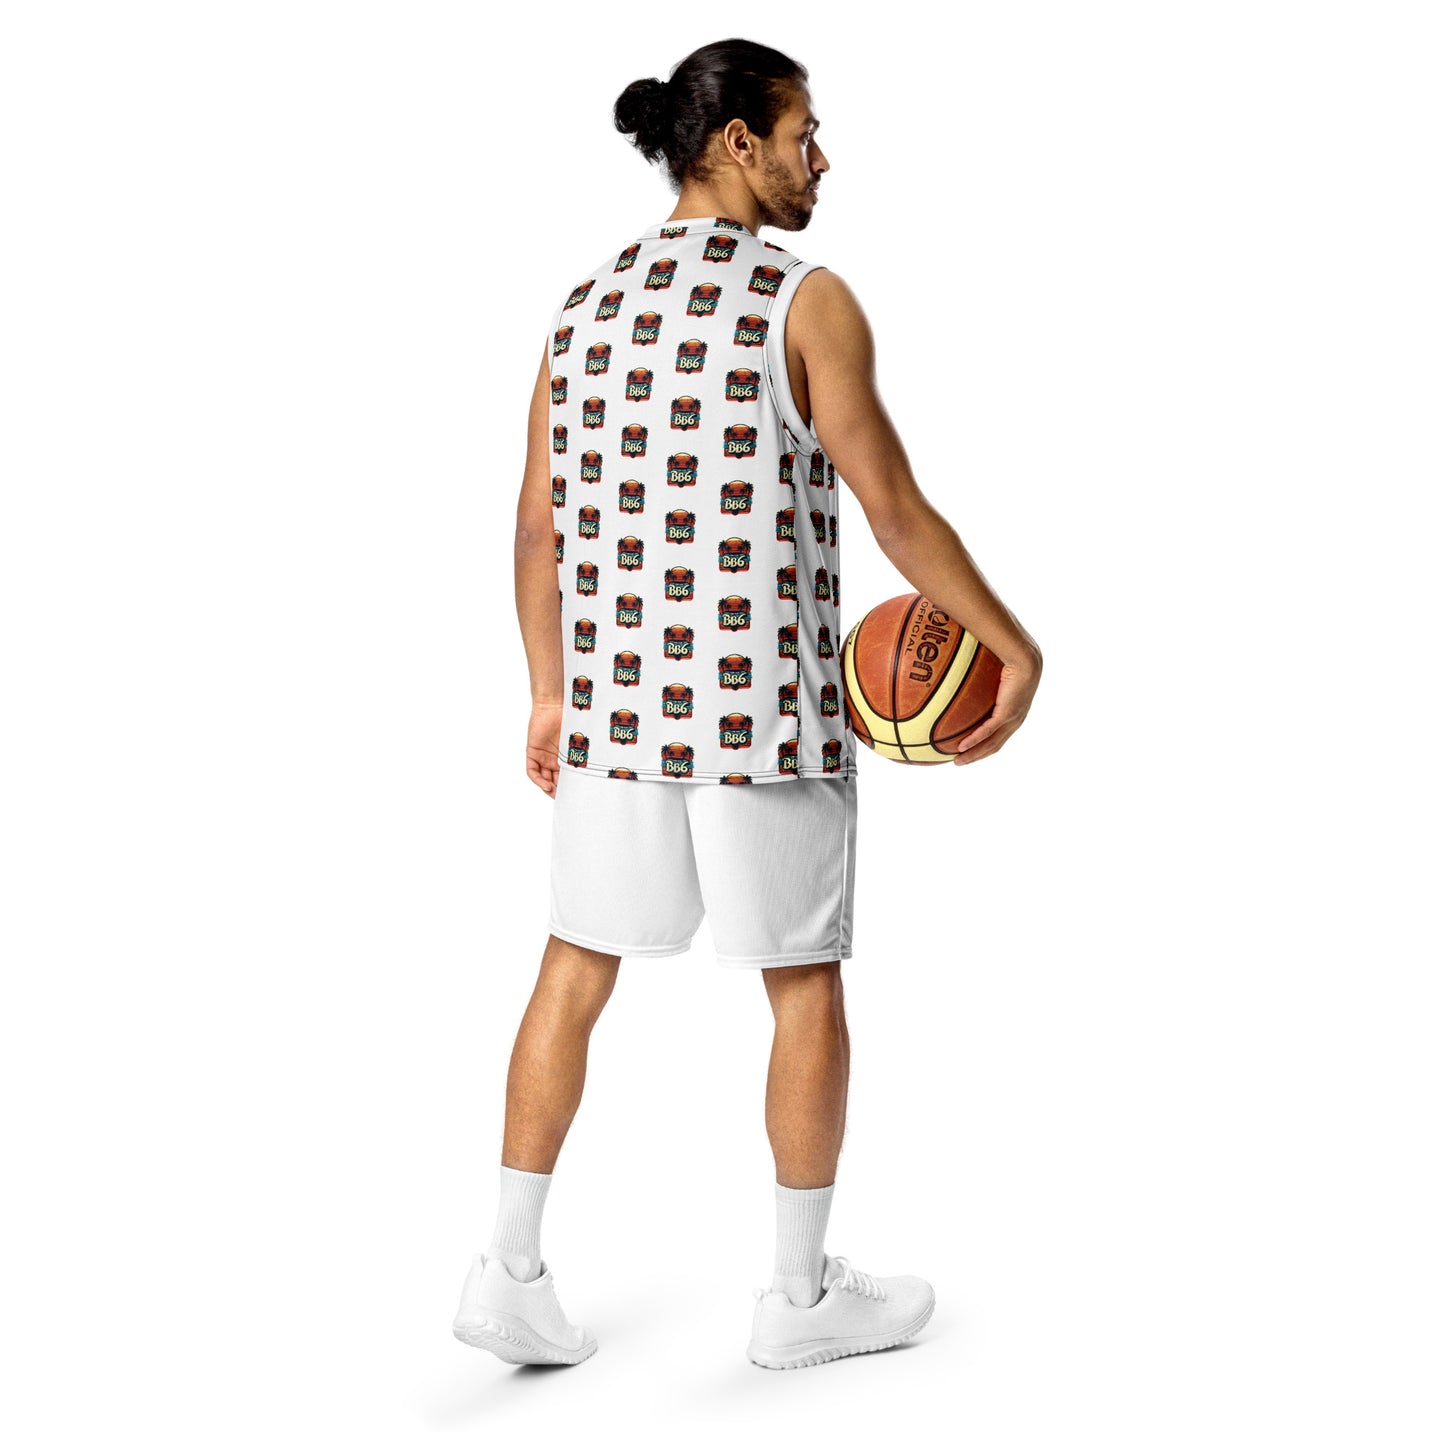 BB6 basketball jersey